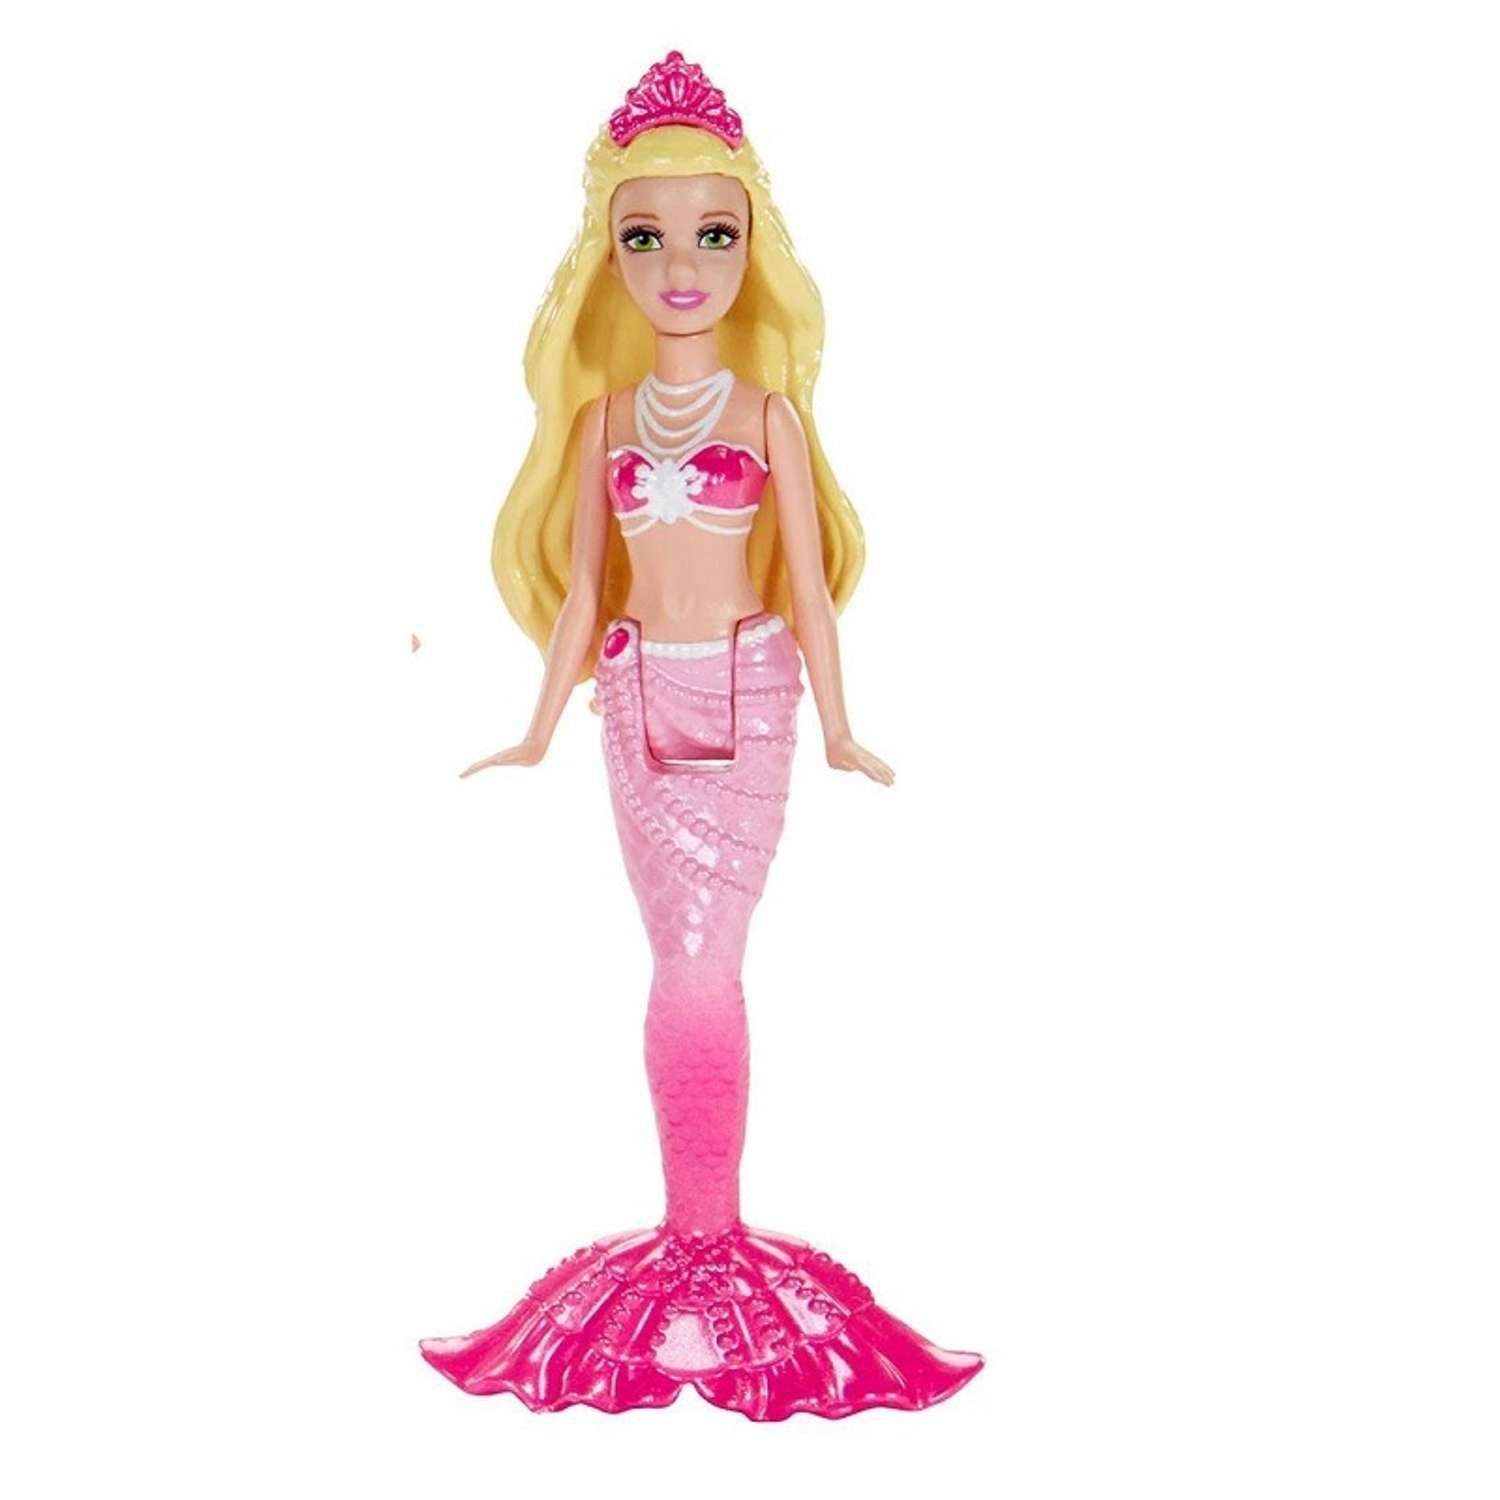 Мини куклы барби. Кукла Барби Русалочка Маттель. Кукла мини Русалка Мателл. Кукла Barbie Волшебная Русалочка, 32 см, fjc91. Куклы Барби мини Маттель.